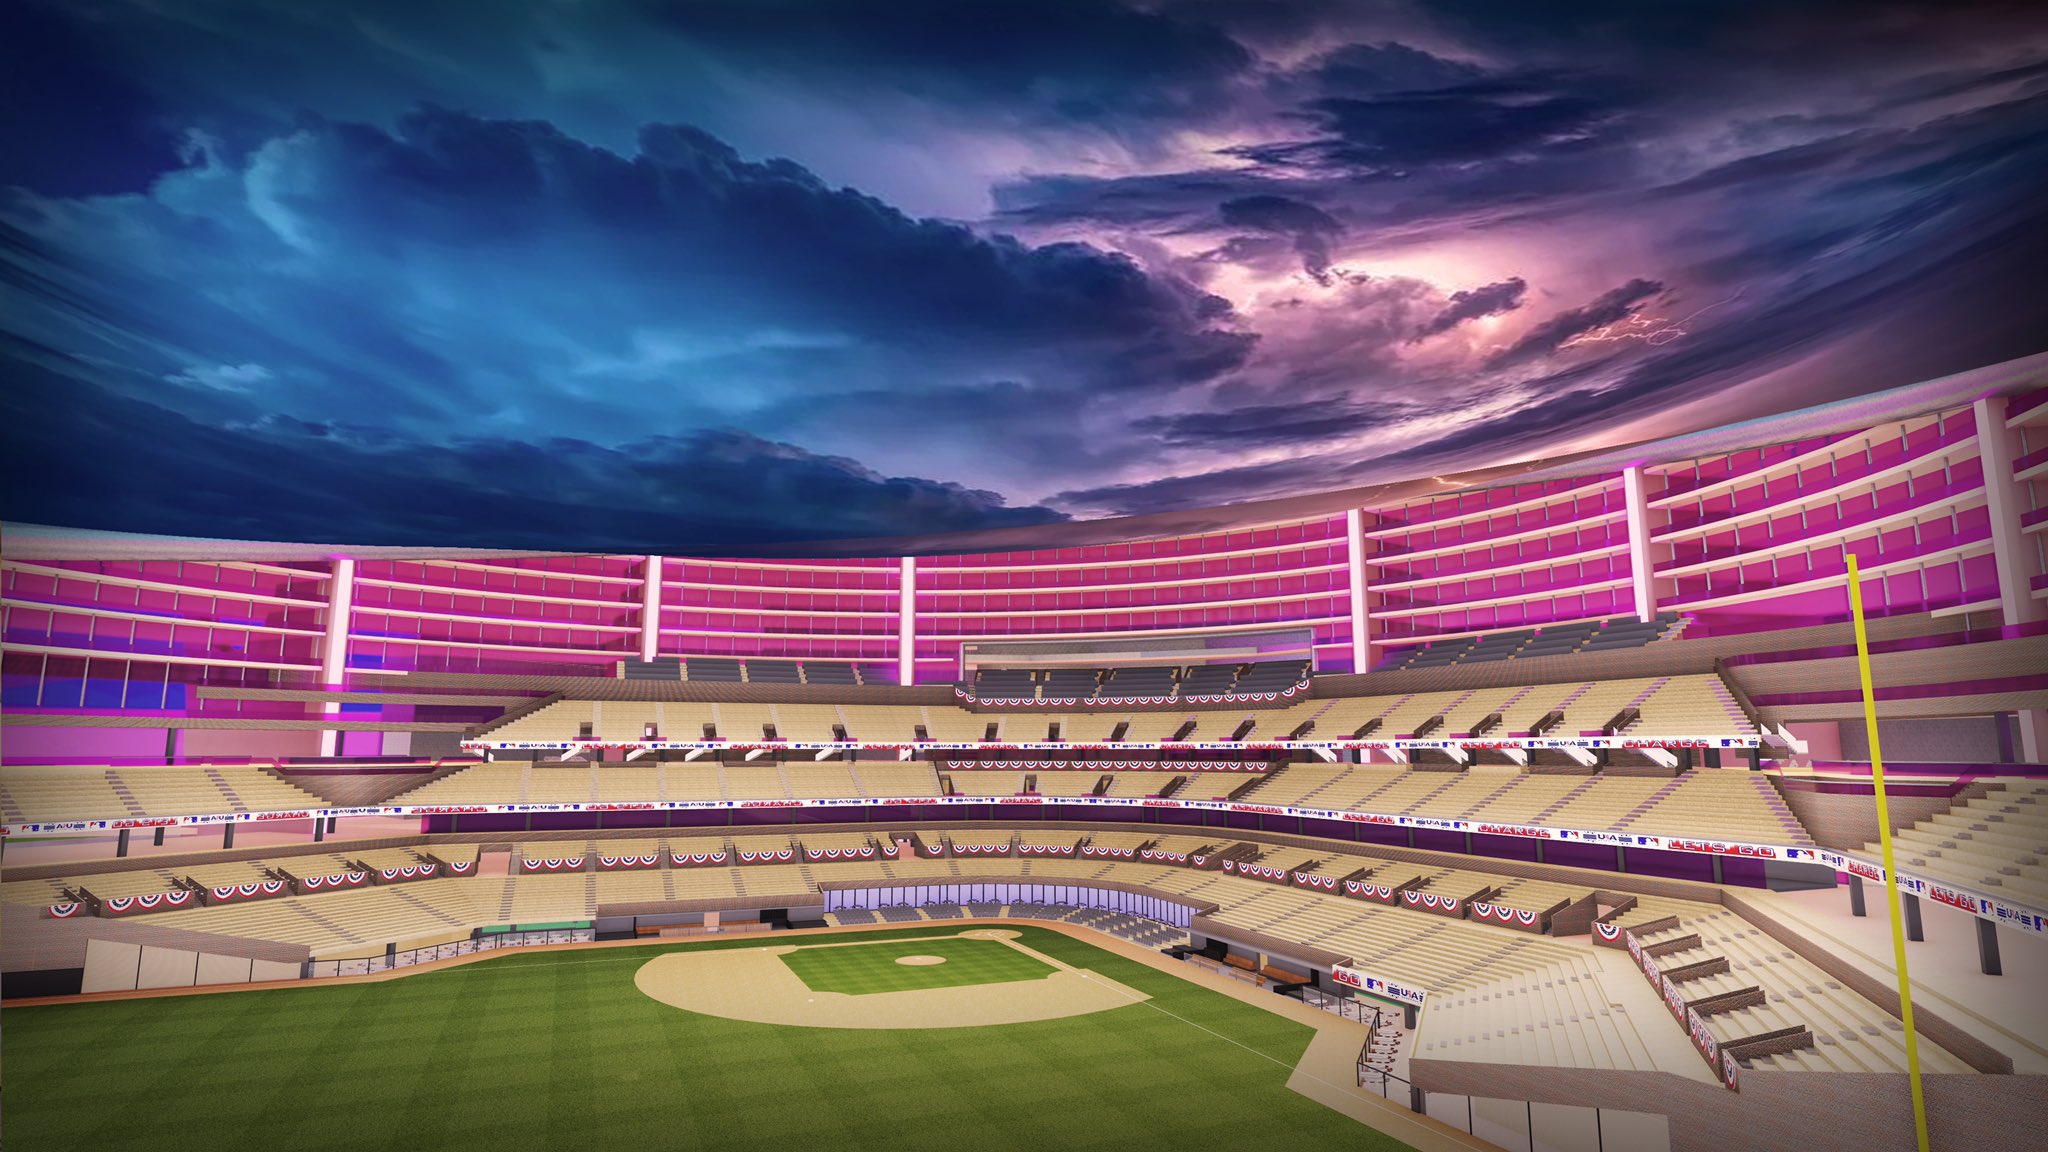 Arash Markazi on X: Here's a new Las Vegas baseball stadium